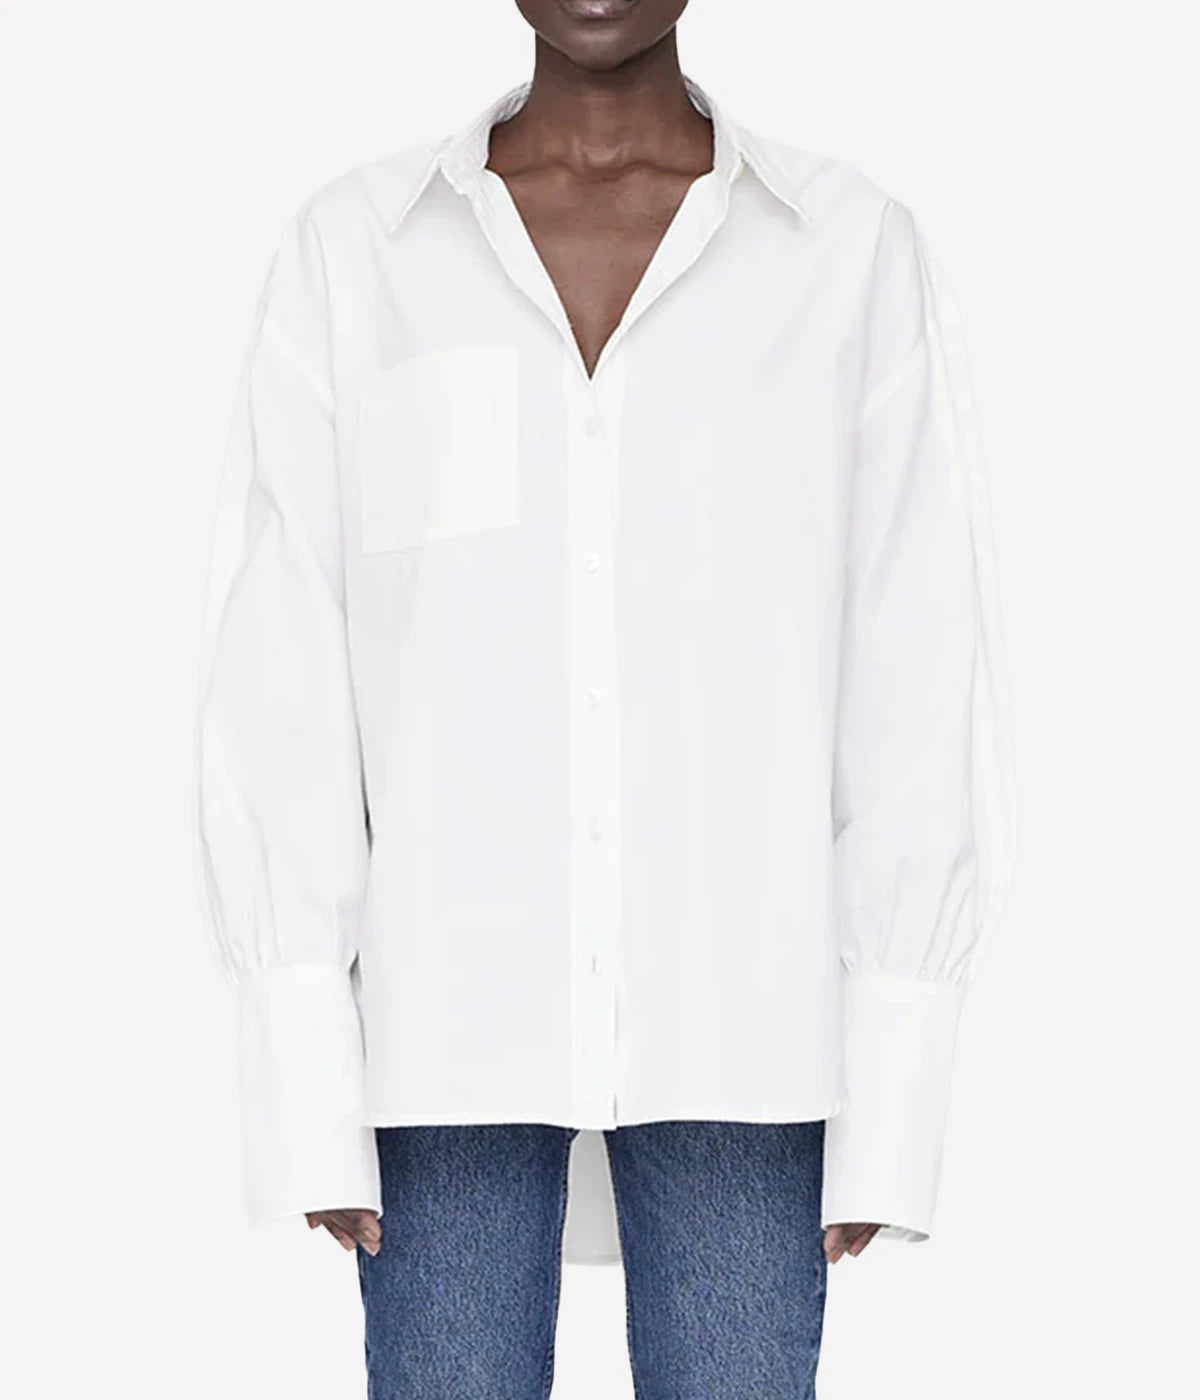 Maxine Shirt in White